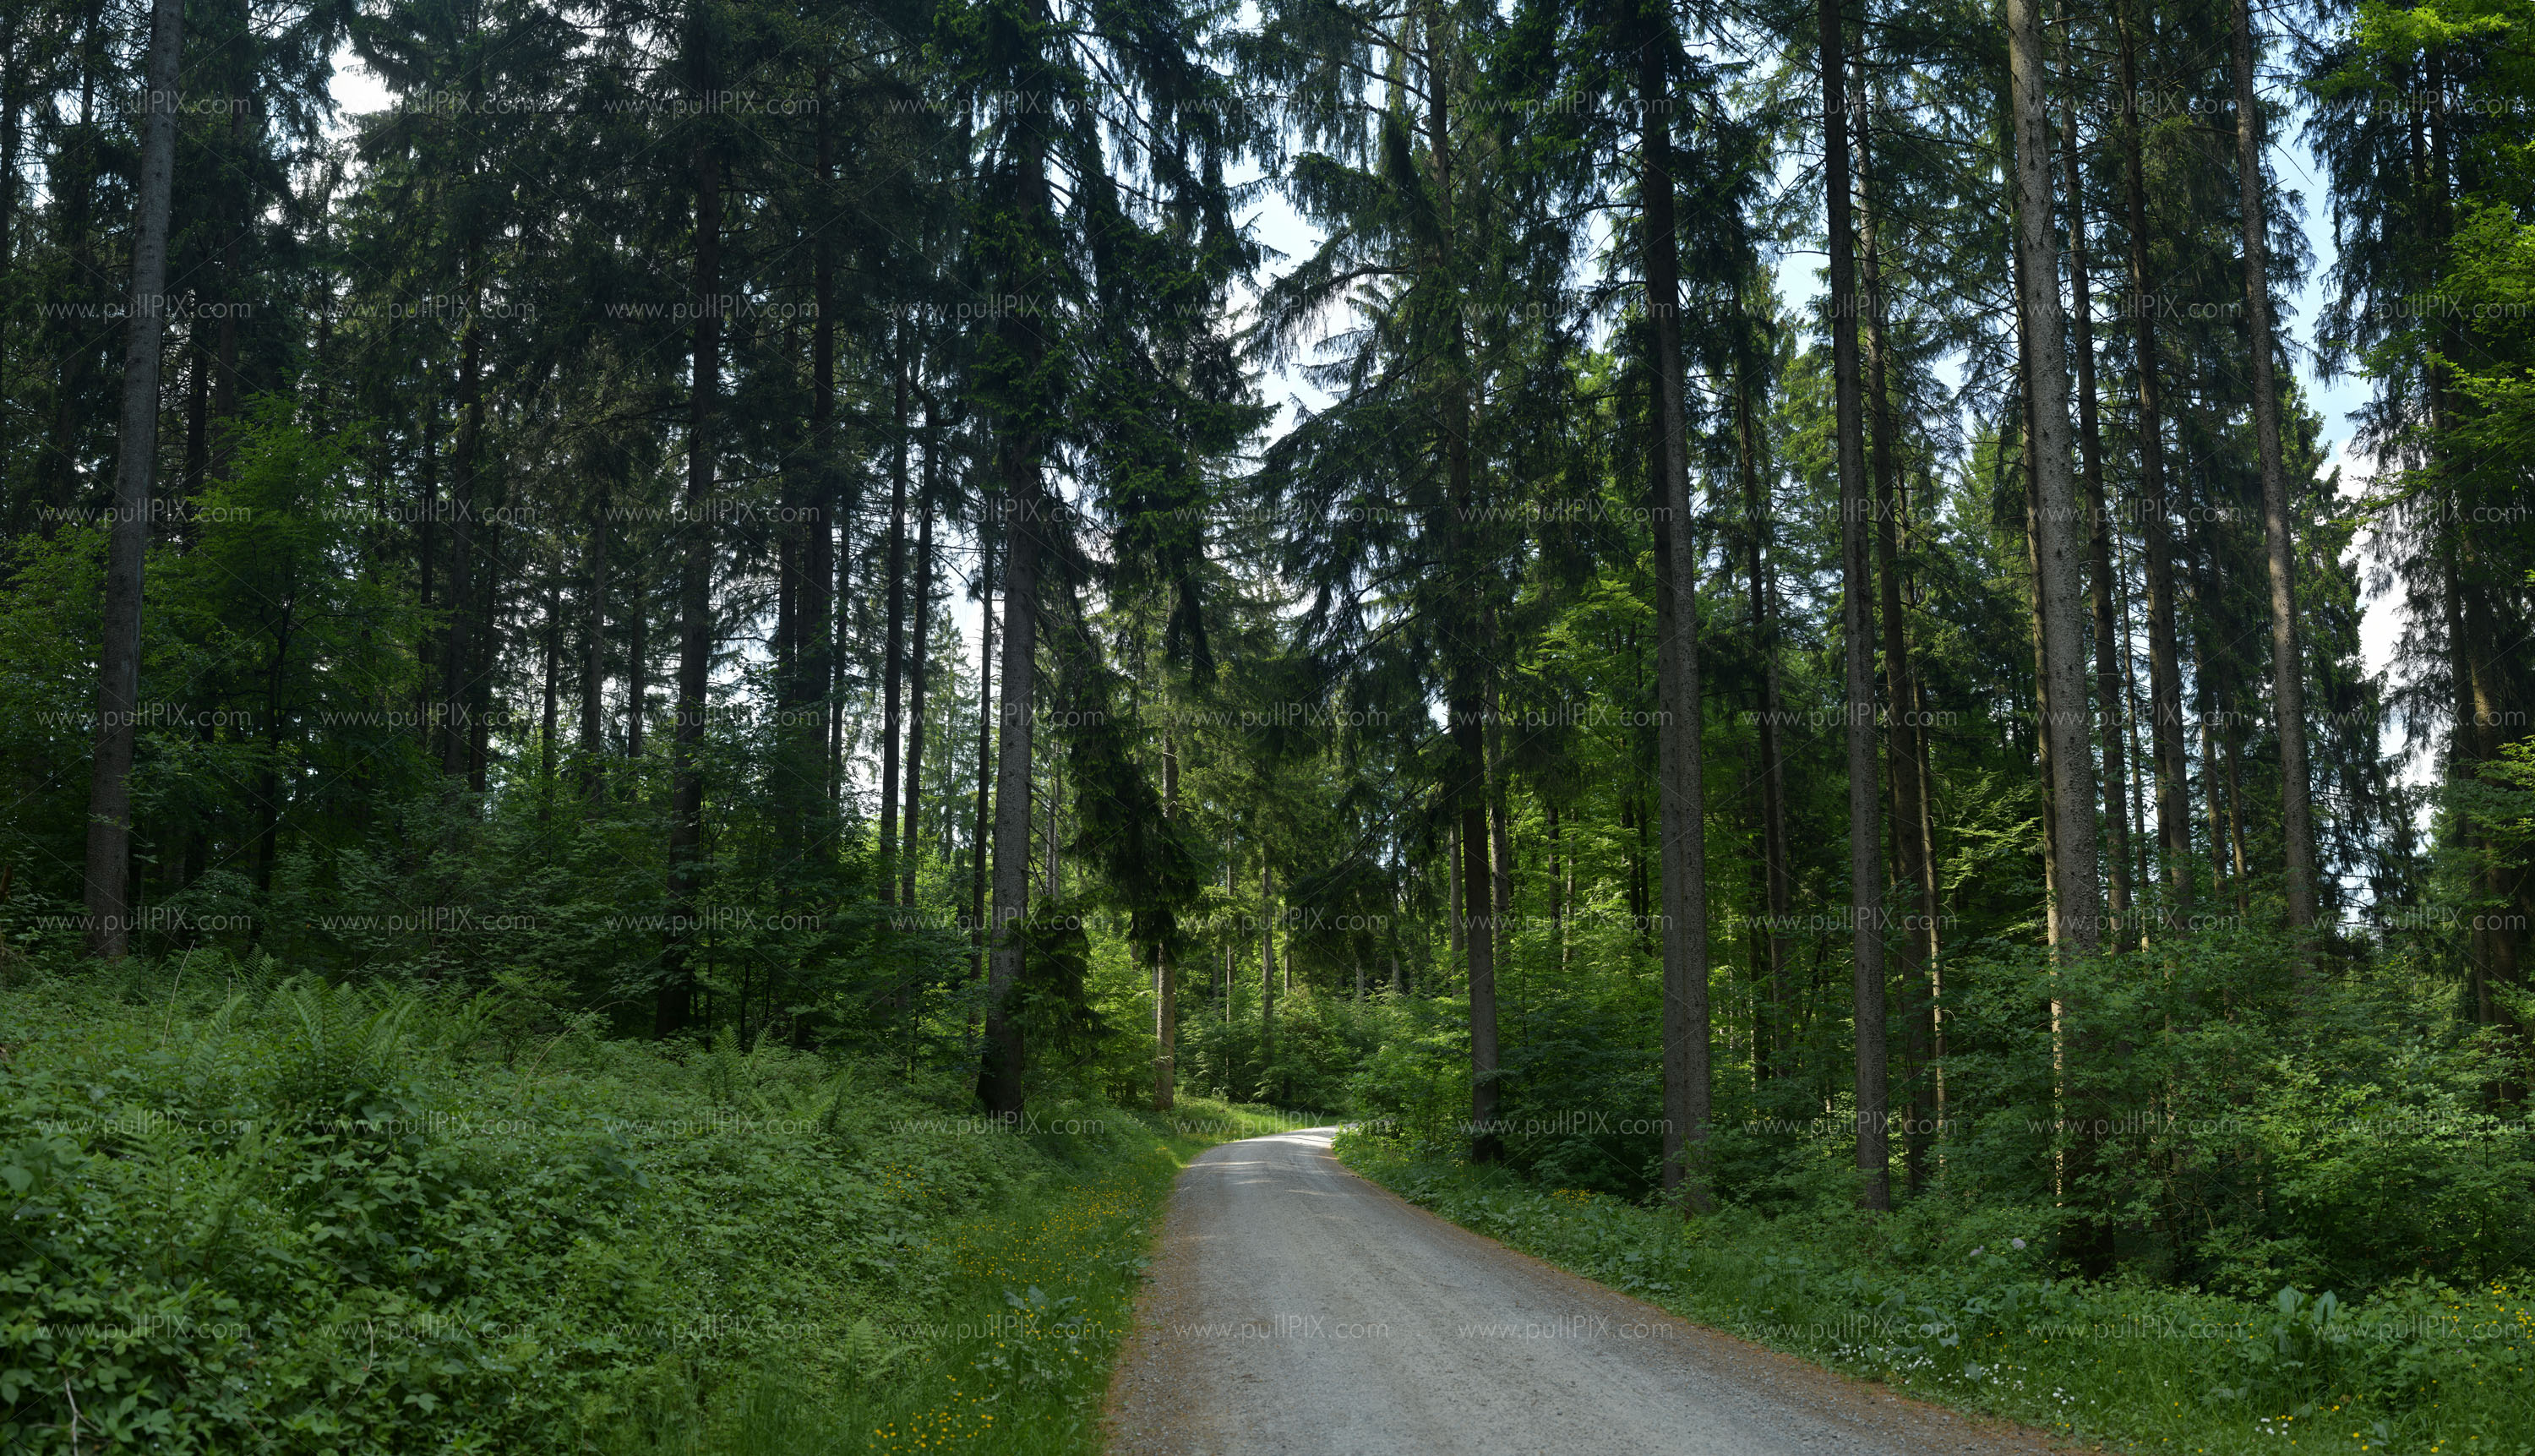 Preview Wirlinger Wald Buchenberg.jpg